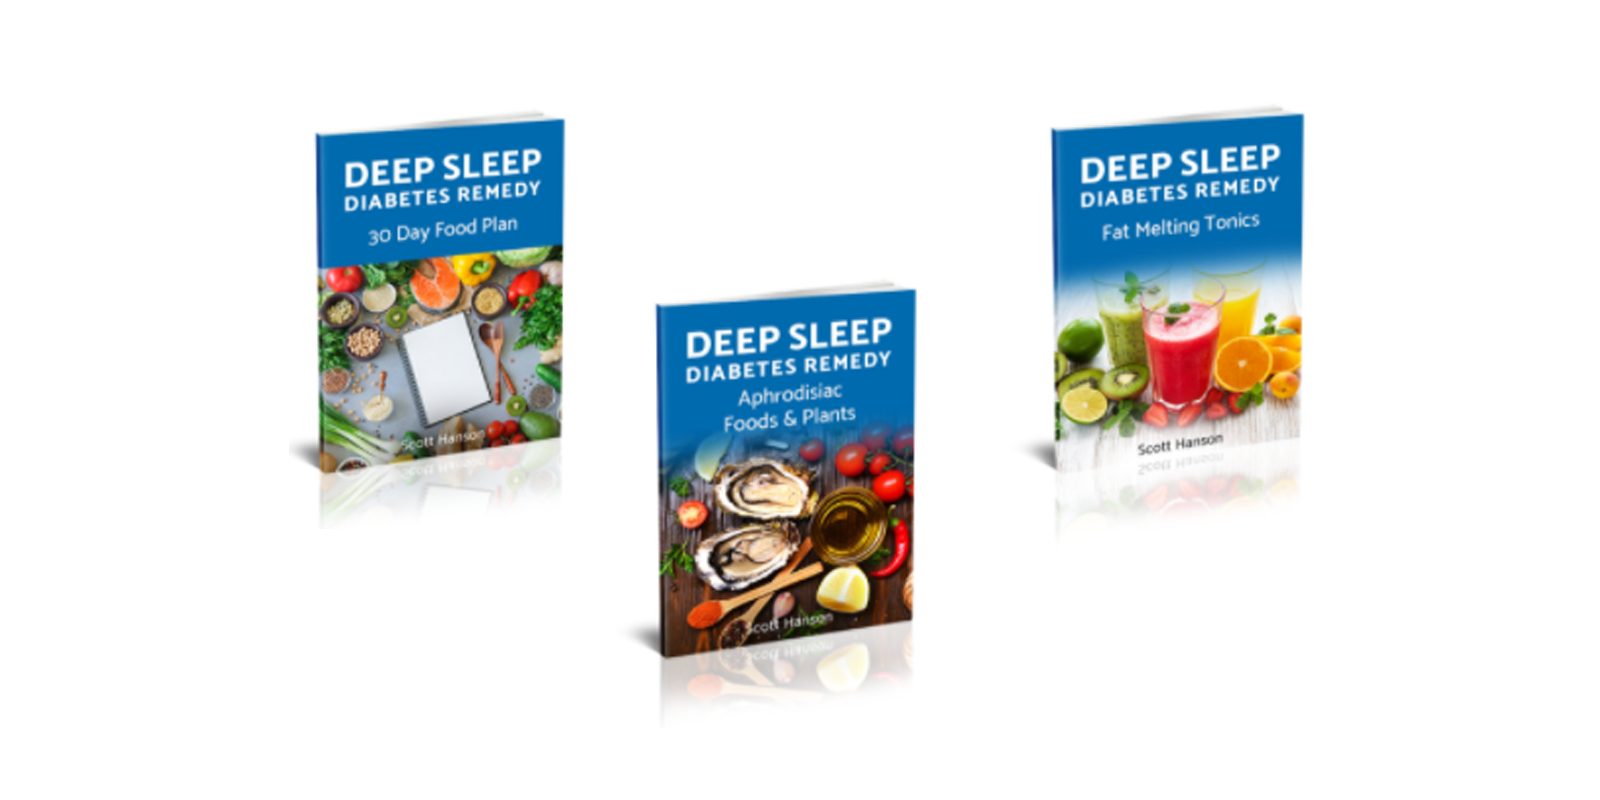 Deep Sleep Diabetes Remedy bonuses